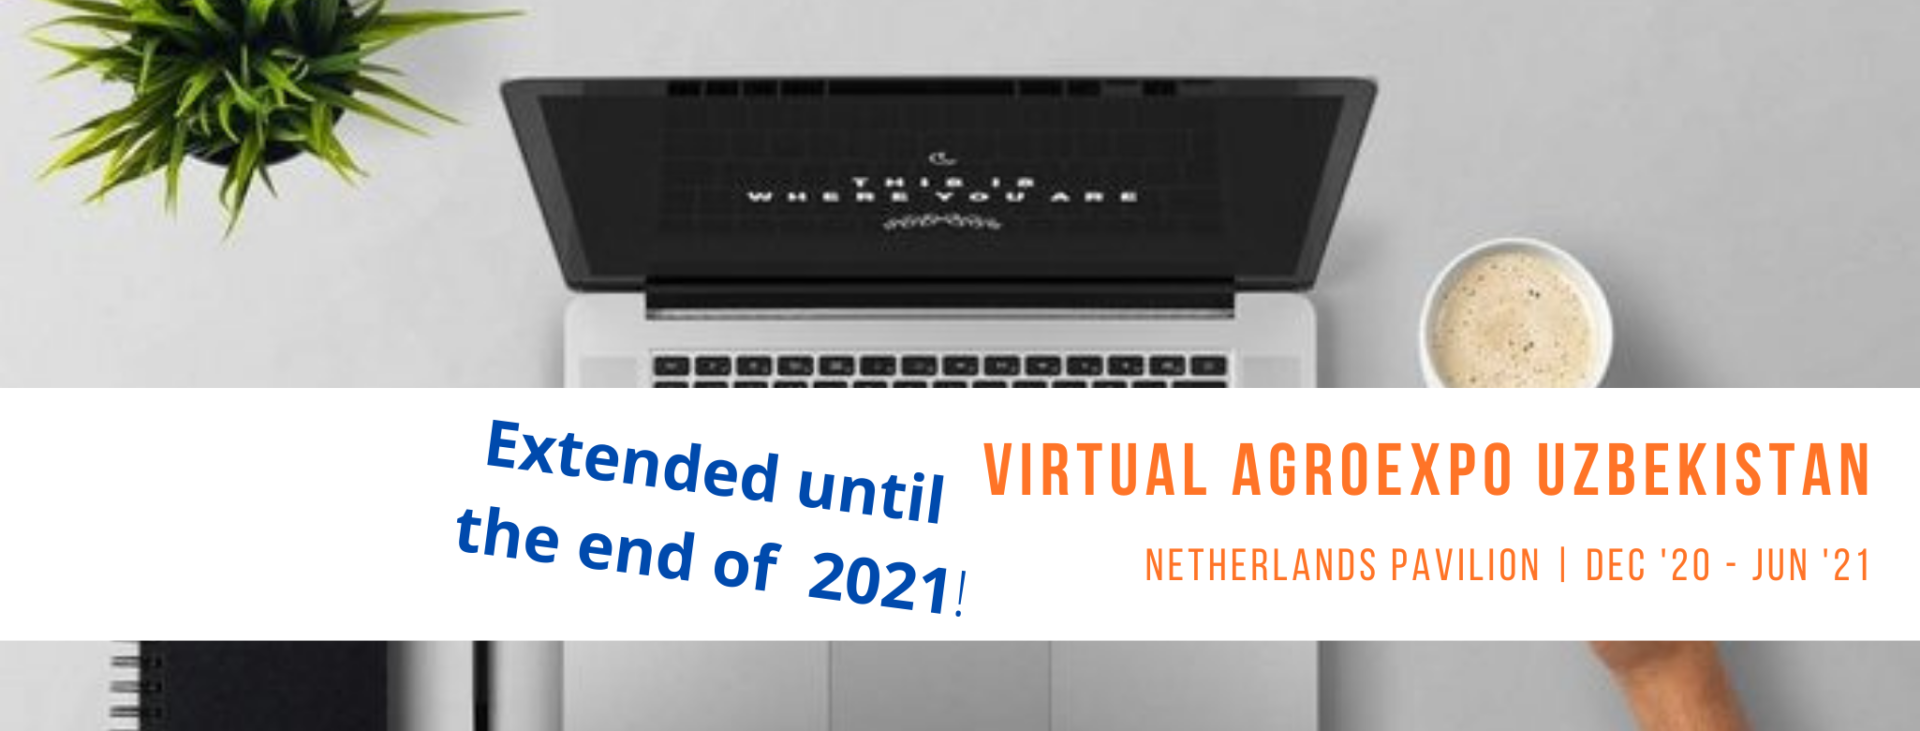 Netherlands Pavilion Virtual AgroExpo Uzbekistan